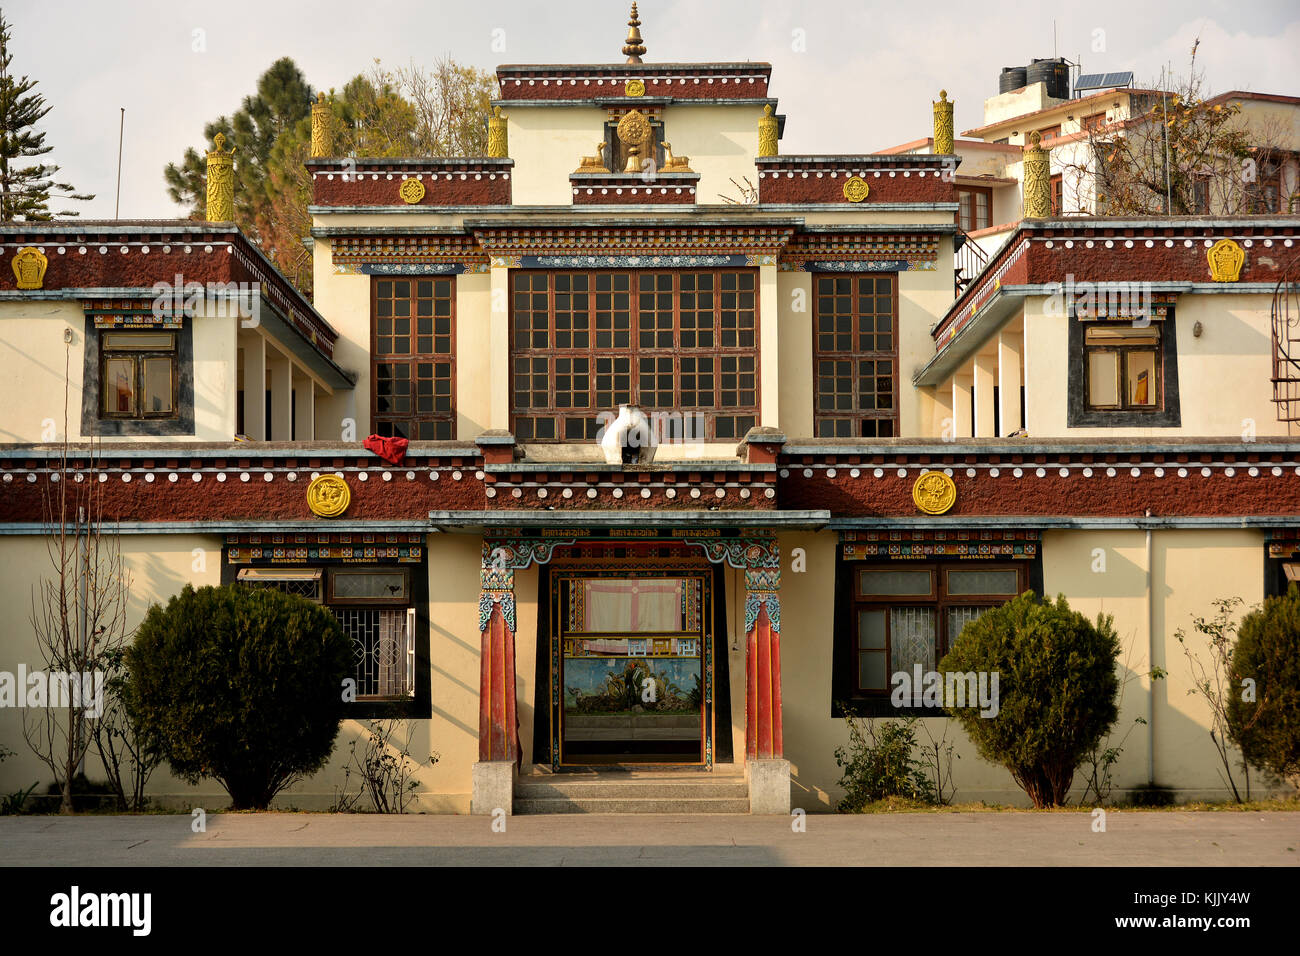 Jamgon Kongtrul monasteryd auf Pullahari Hügel in Bodnath. Nepal. Stockfoto